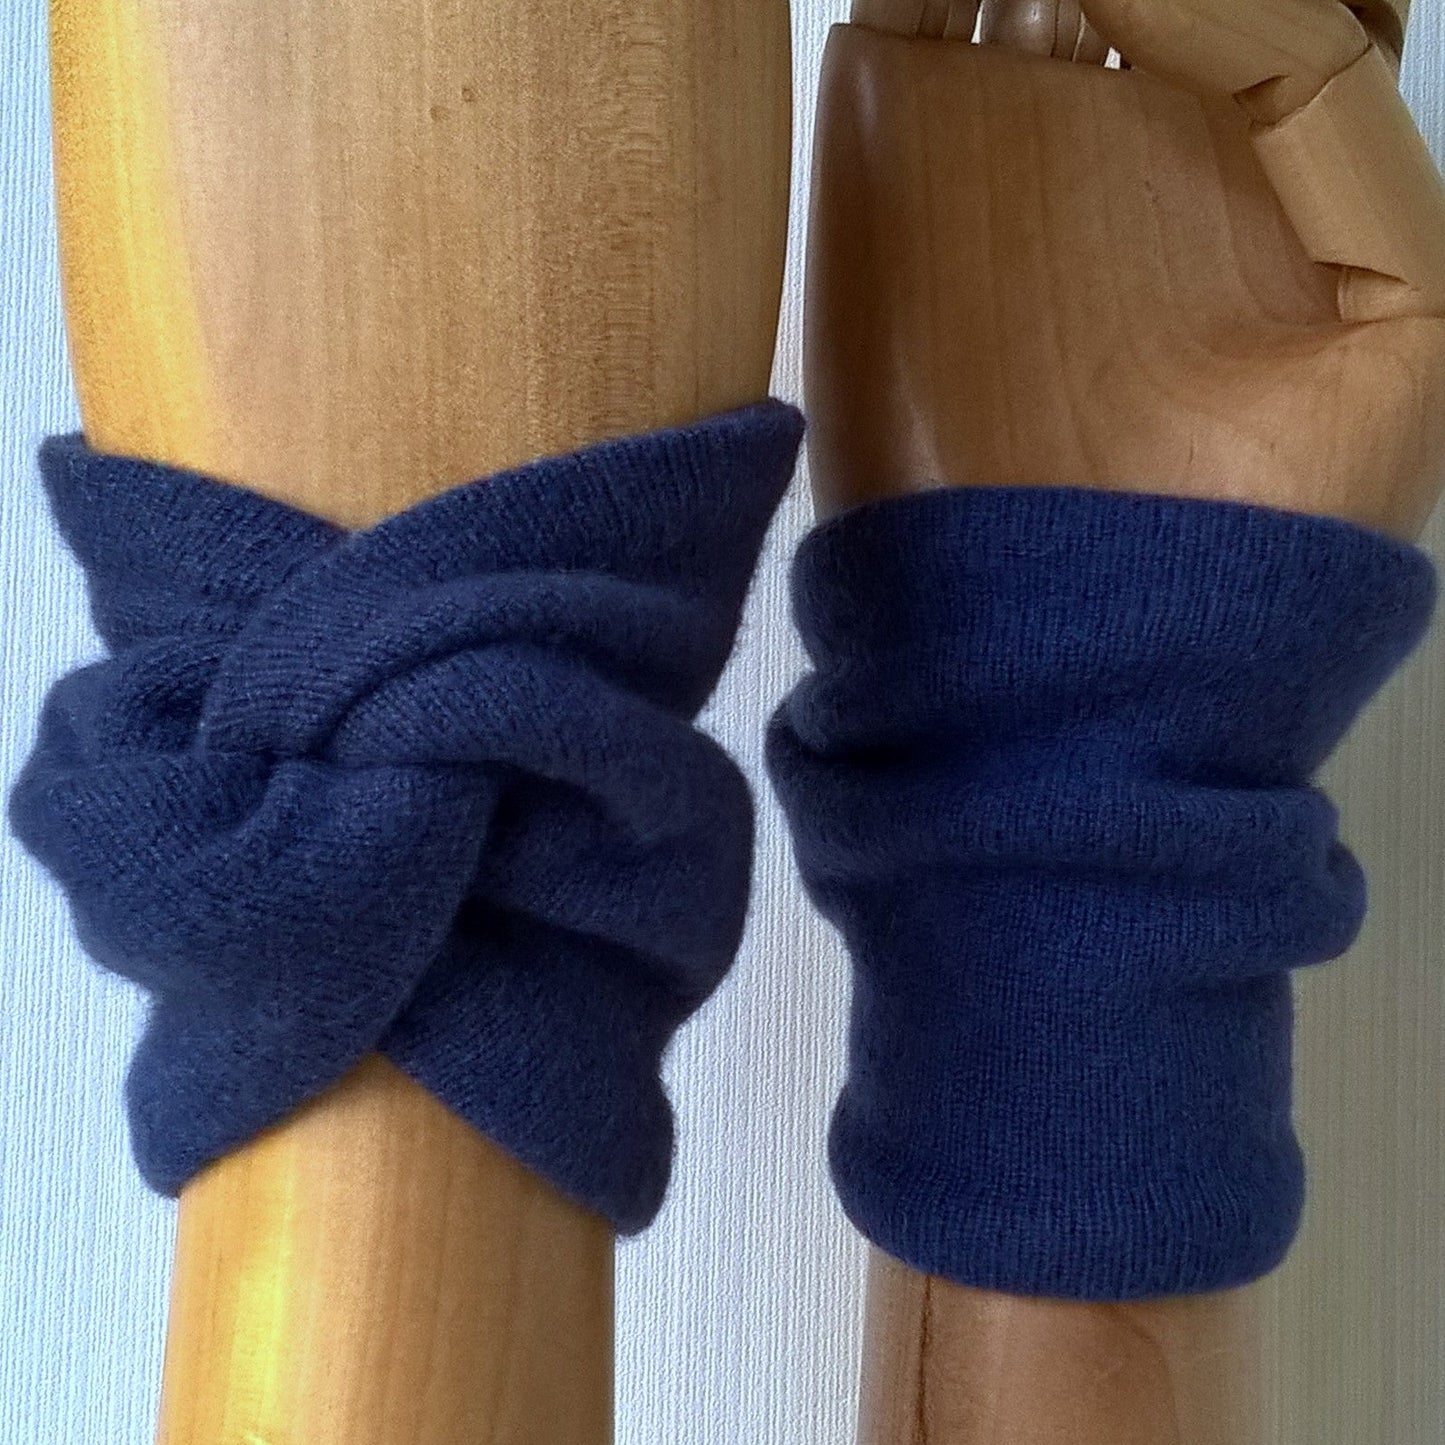 Spruce blue cashmere wrist warmers in a knot design